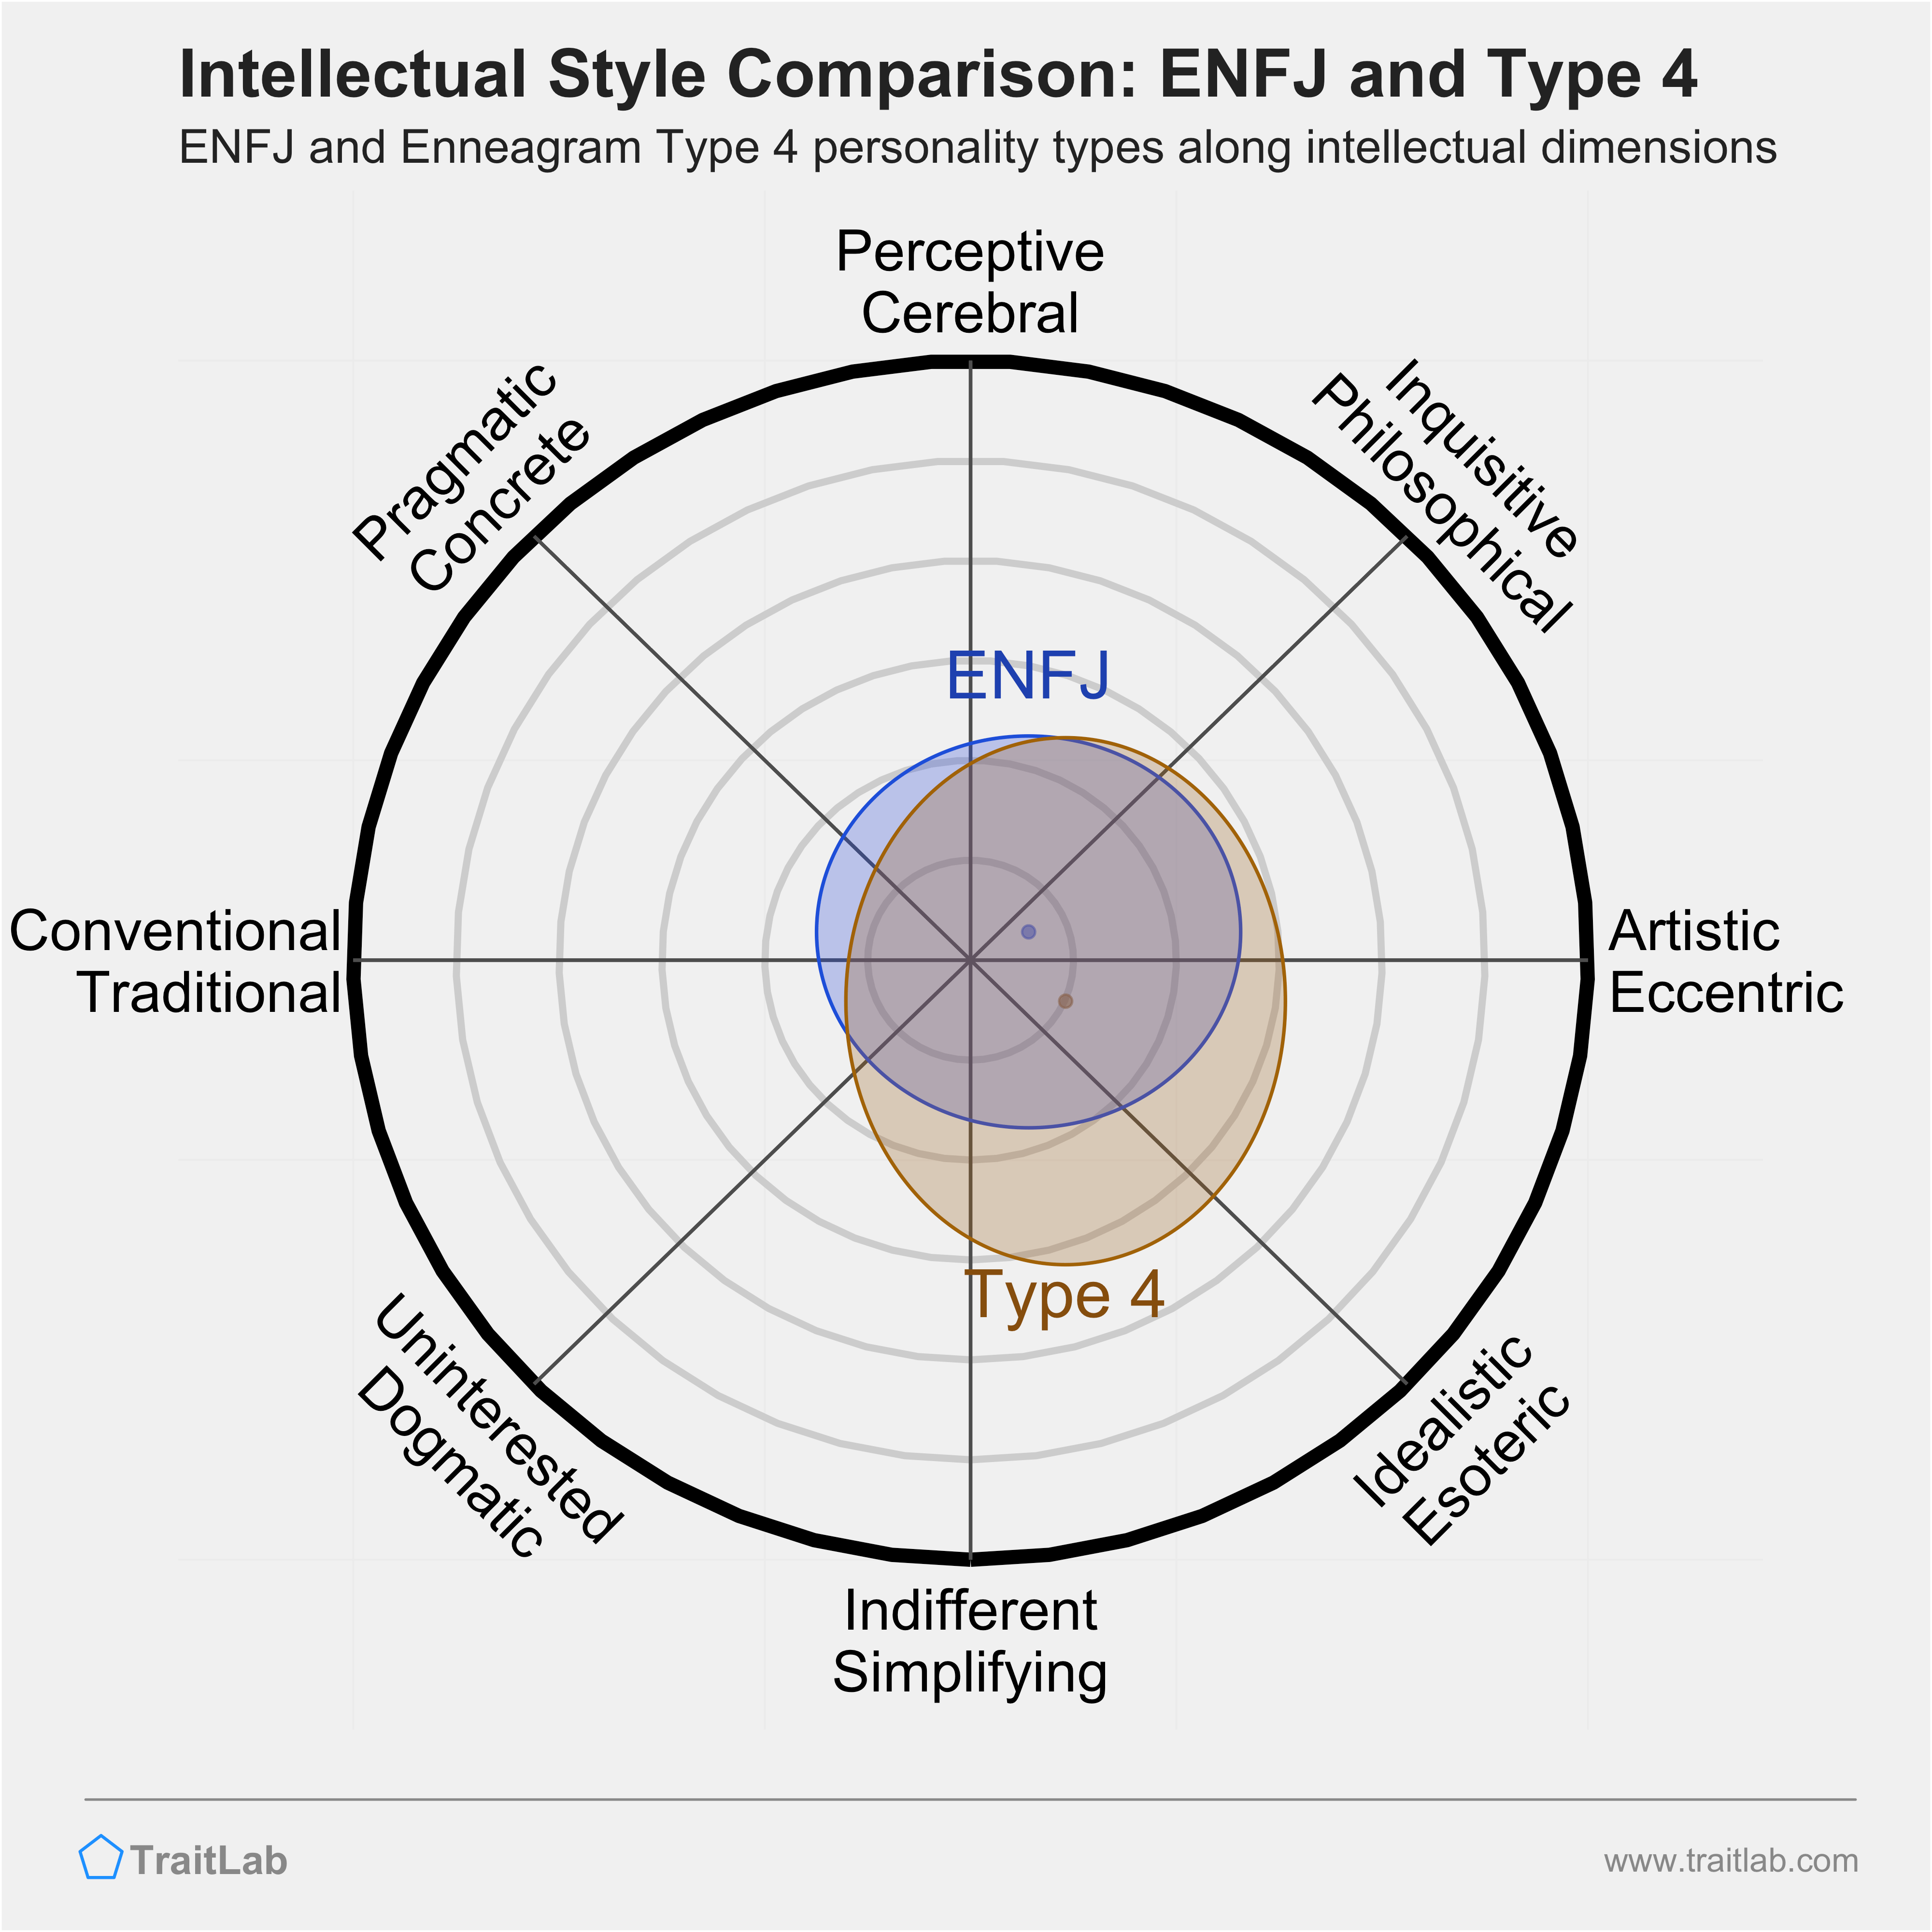 ENFJ and Type 4 comparison across intellectual dimensions